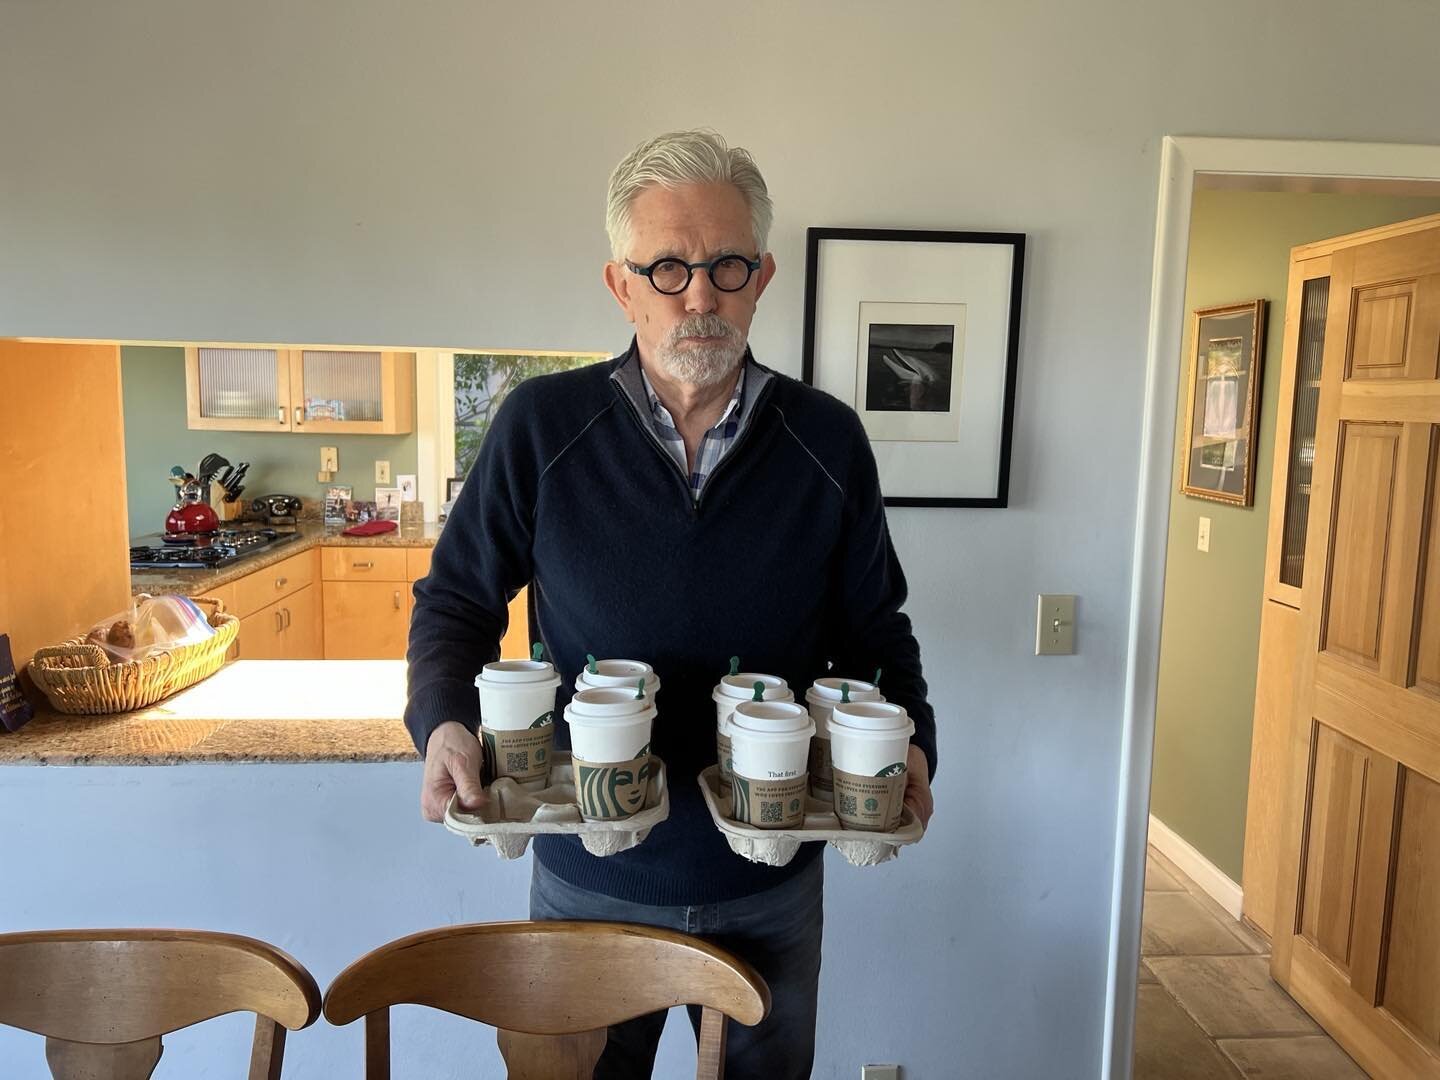 Upon retirement, @realfritzcoleman is enjoying his internship and nailed his requisite Starbucks run.